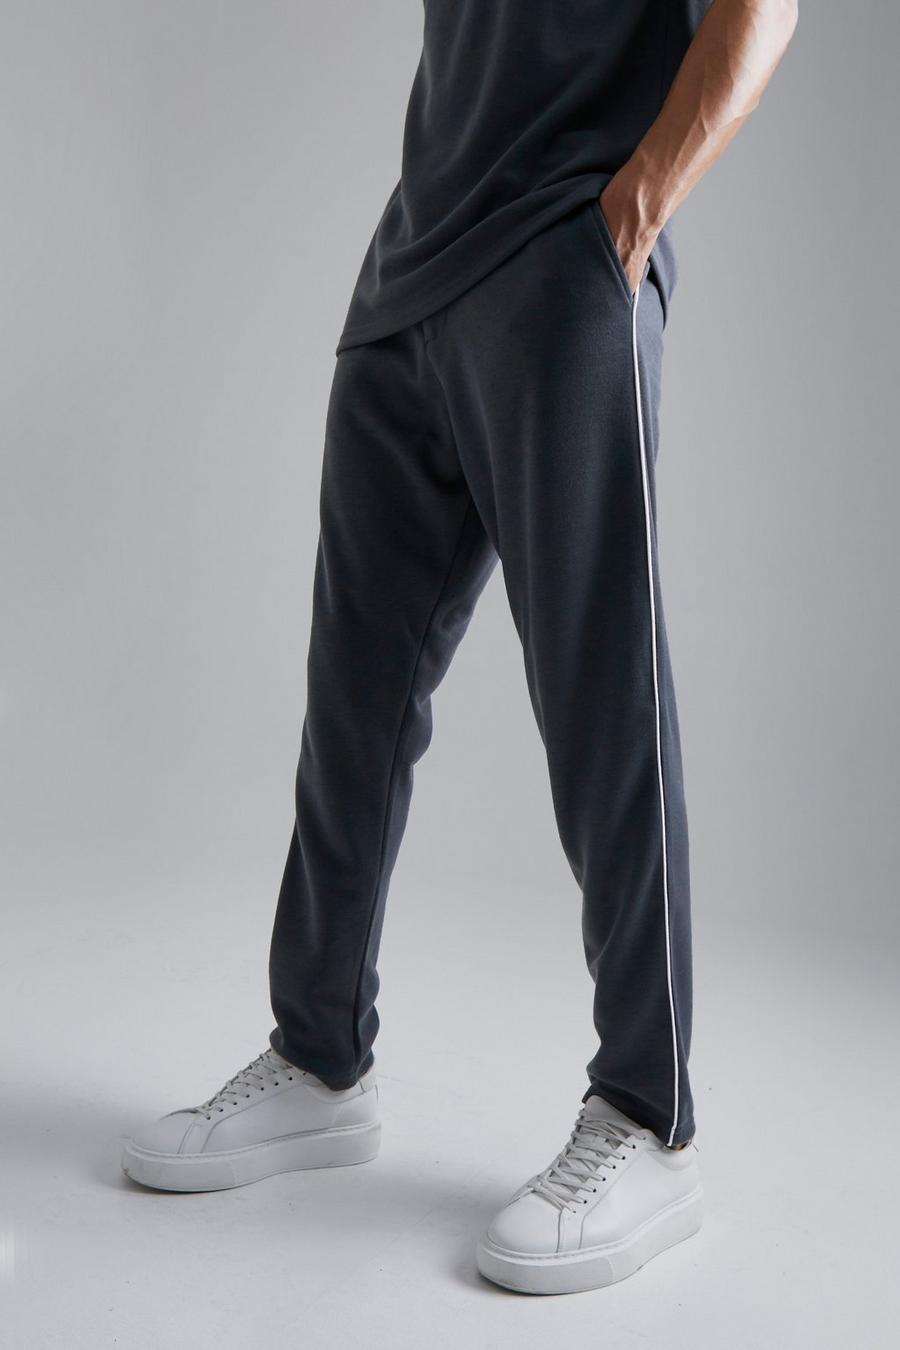 Pantalón Tall ajustado con ribete, Dark grey gris